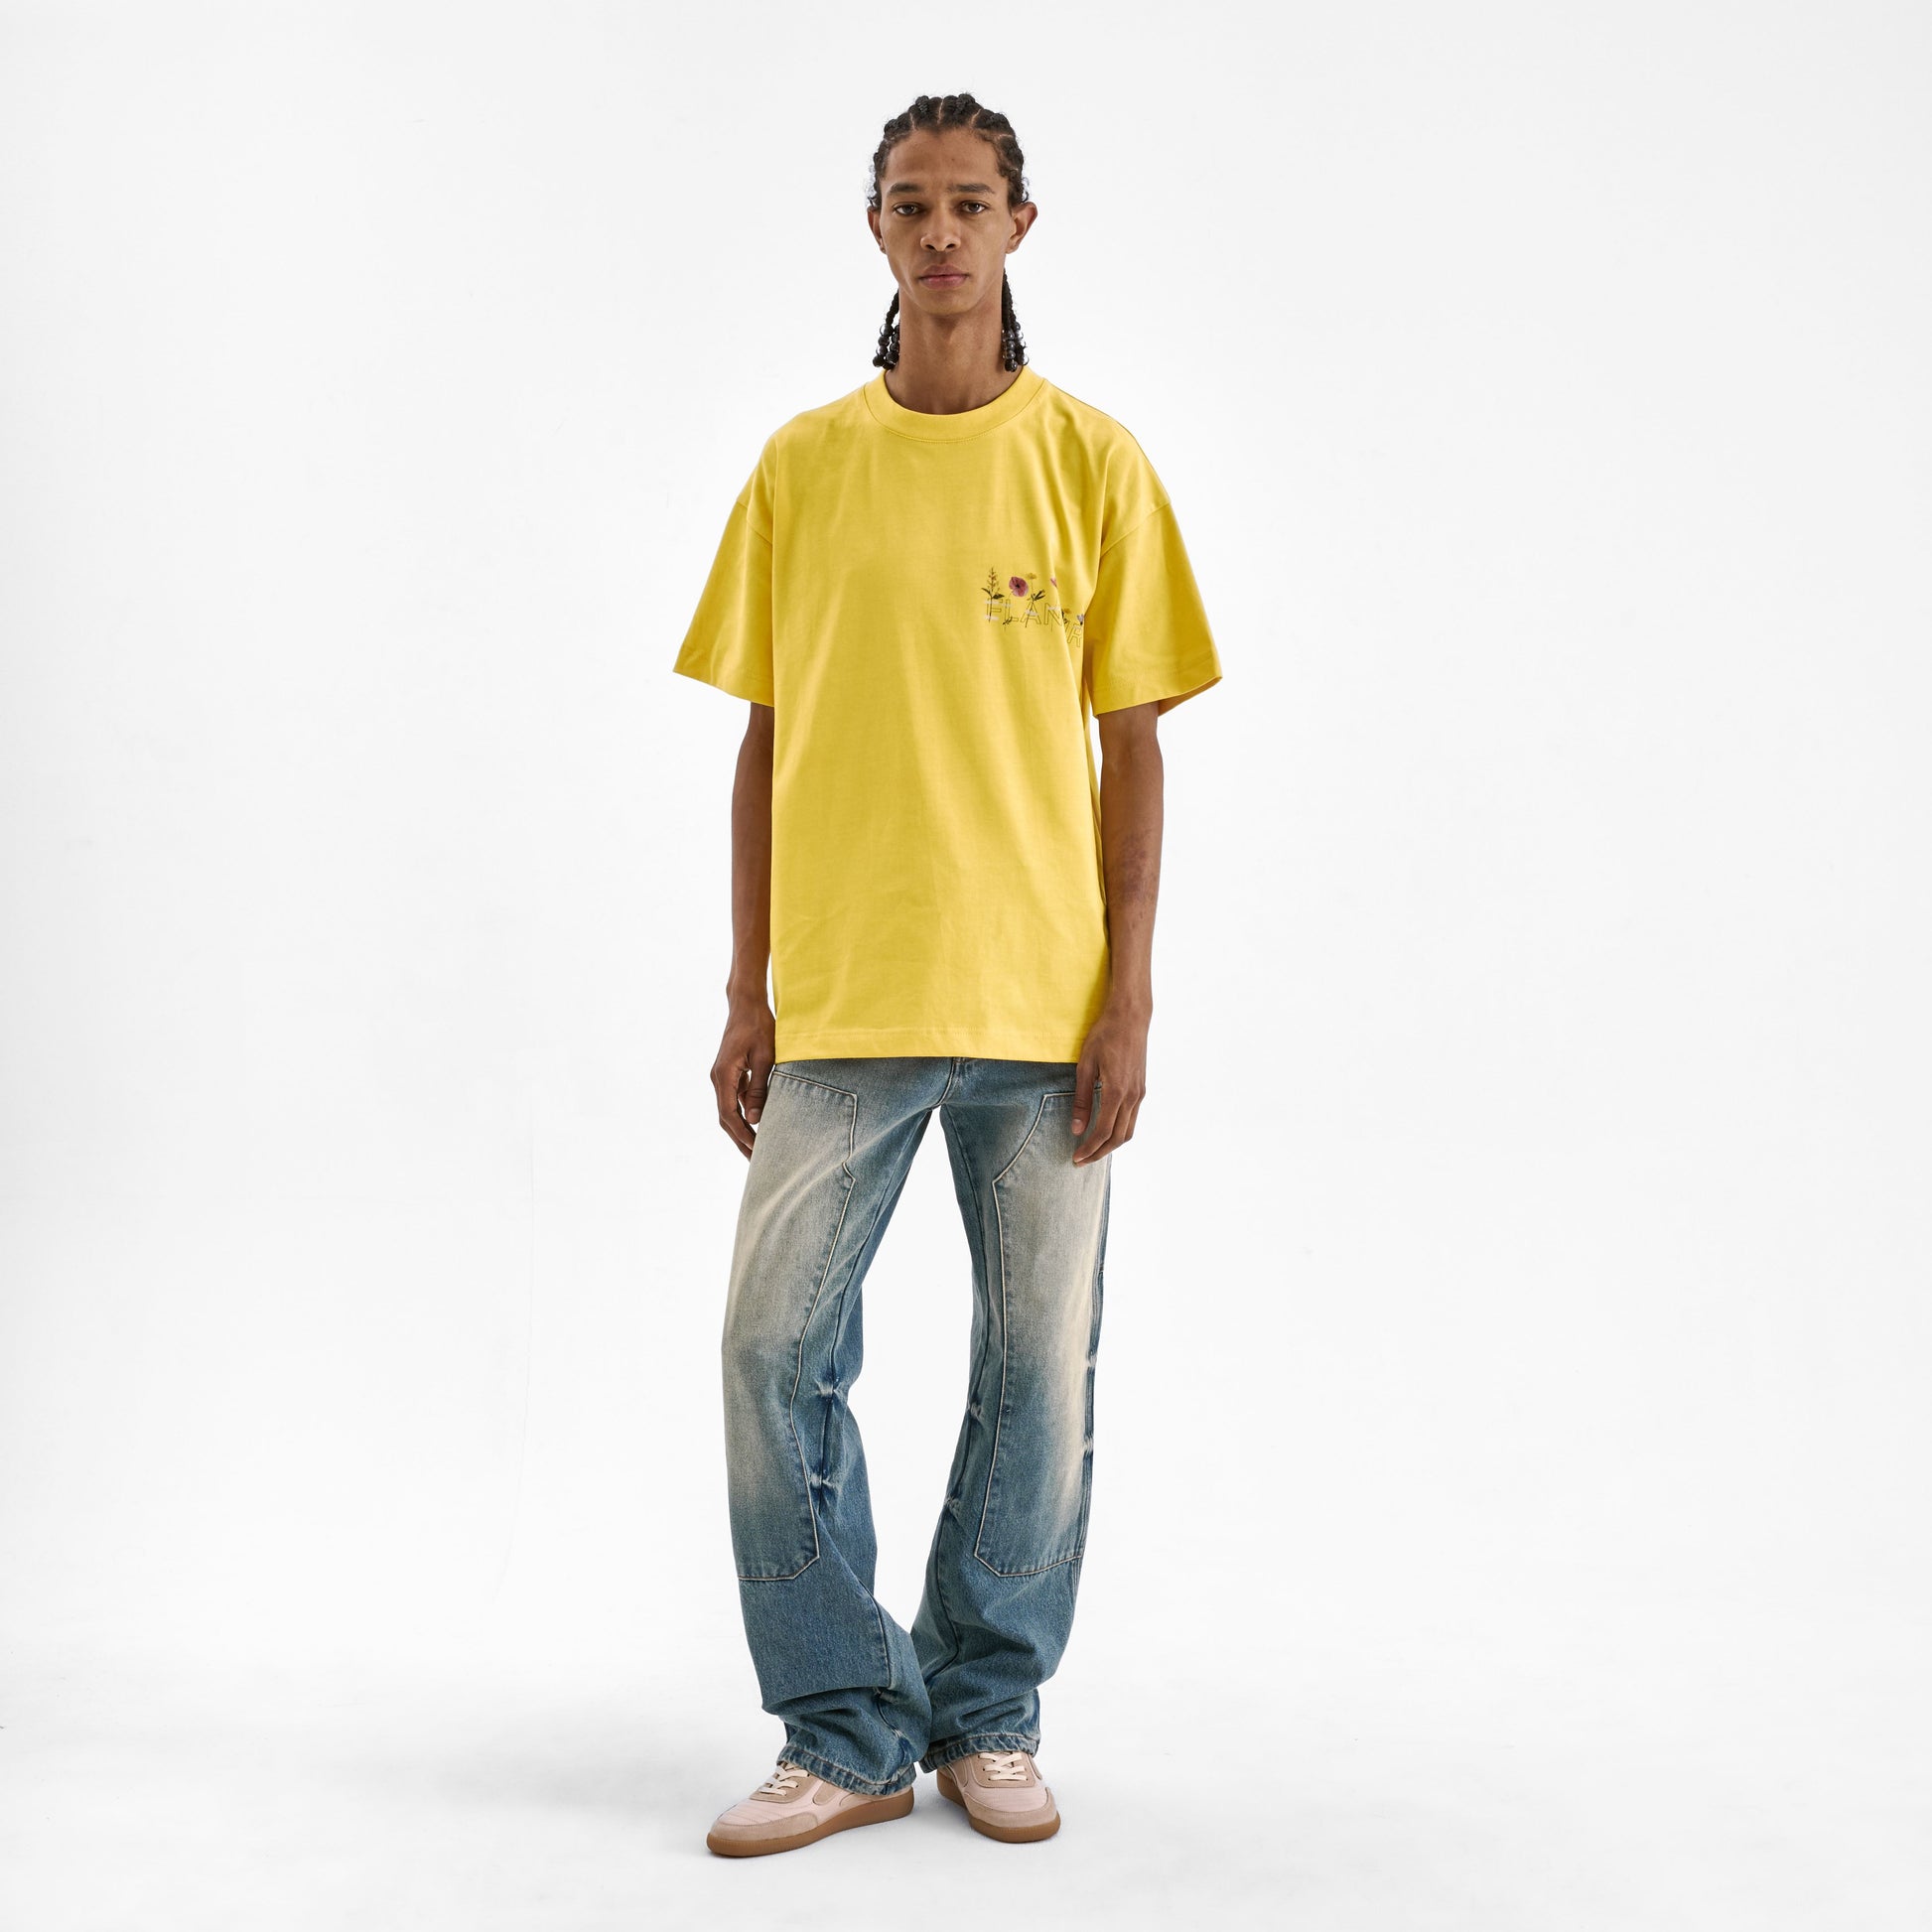 Botanical T-Shirt Yellow